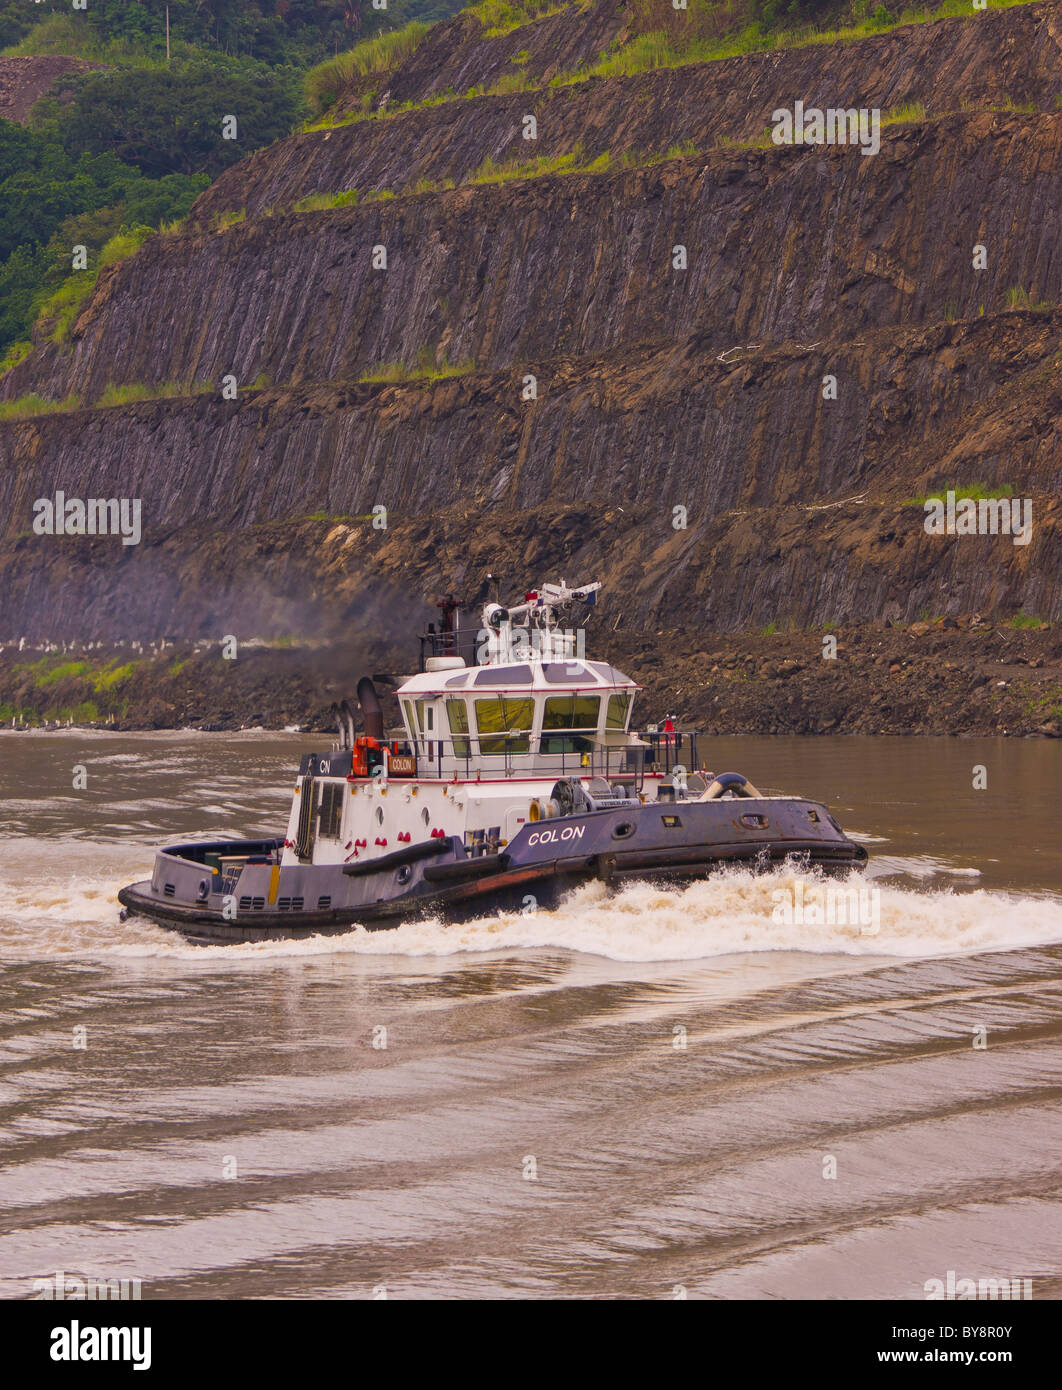 PANAMA - Tugboat on the Panama Canal. Stock Photo